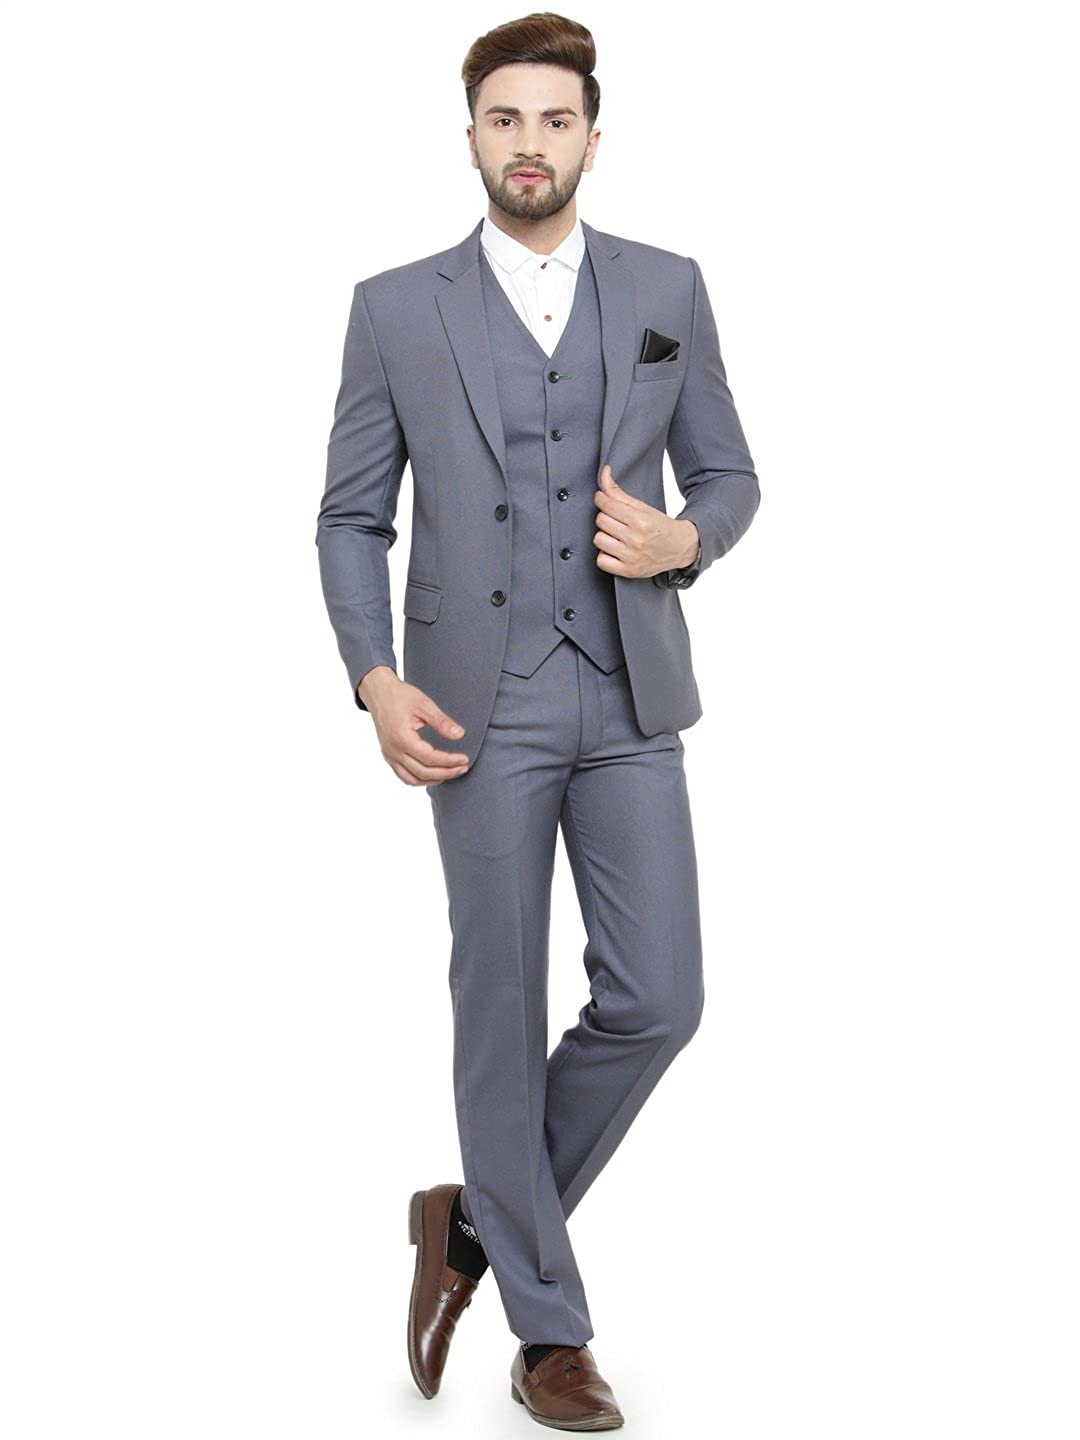 Buy LUXURAZI Men's 3-piece Suit at Amazon.in